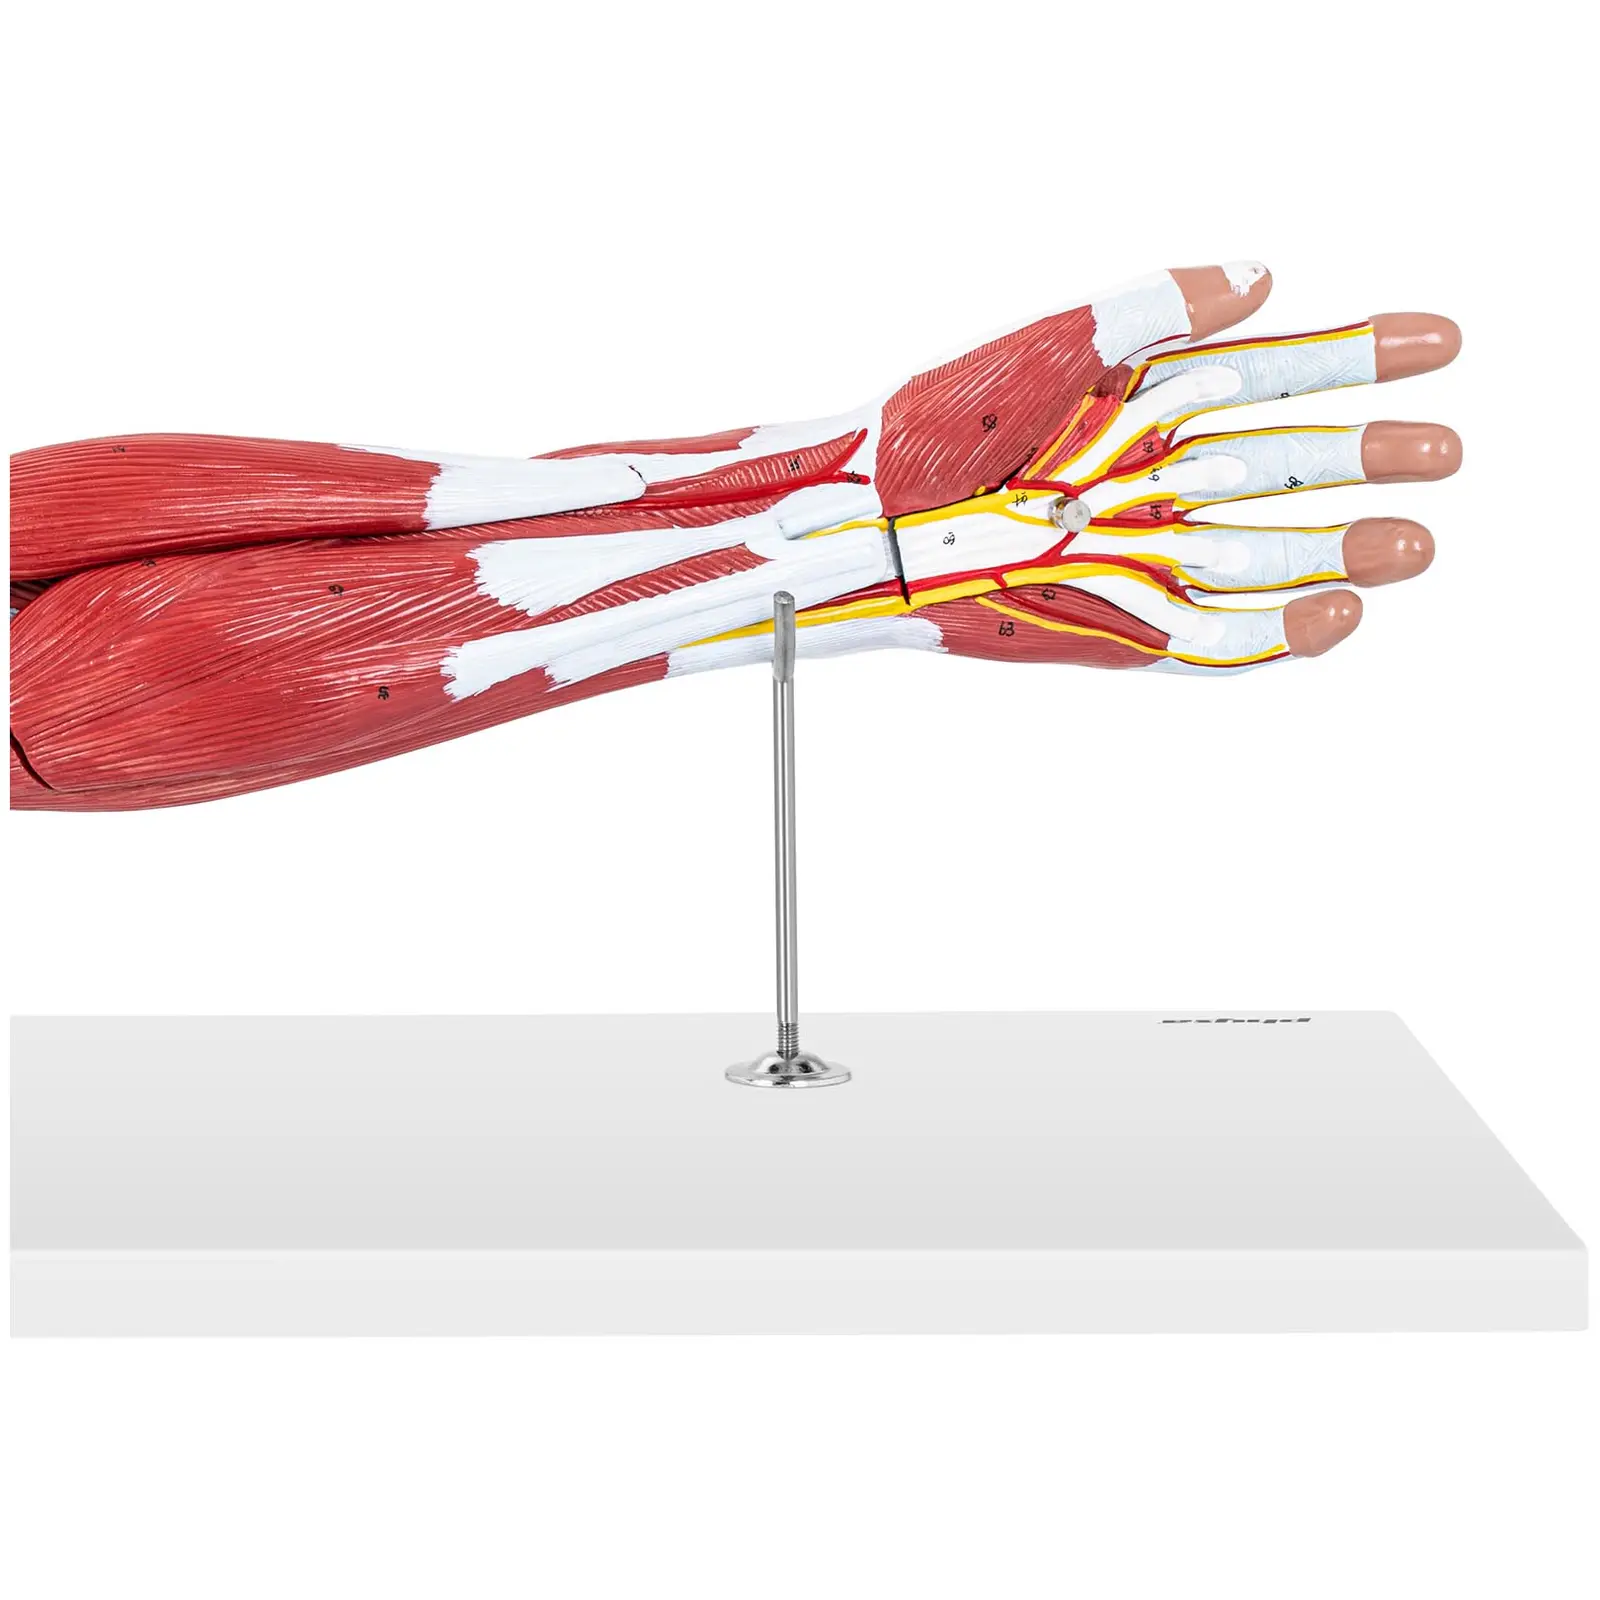 Arm - Anatomisk modell - Sjudelad - Originalstorlek